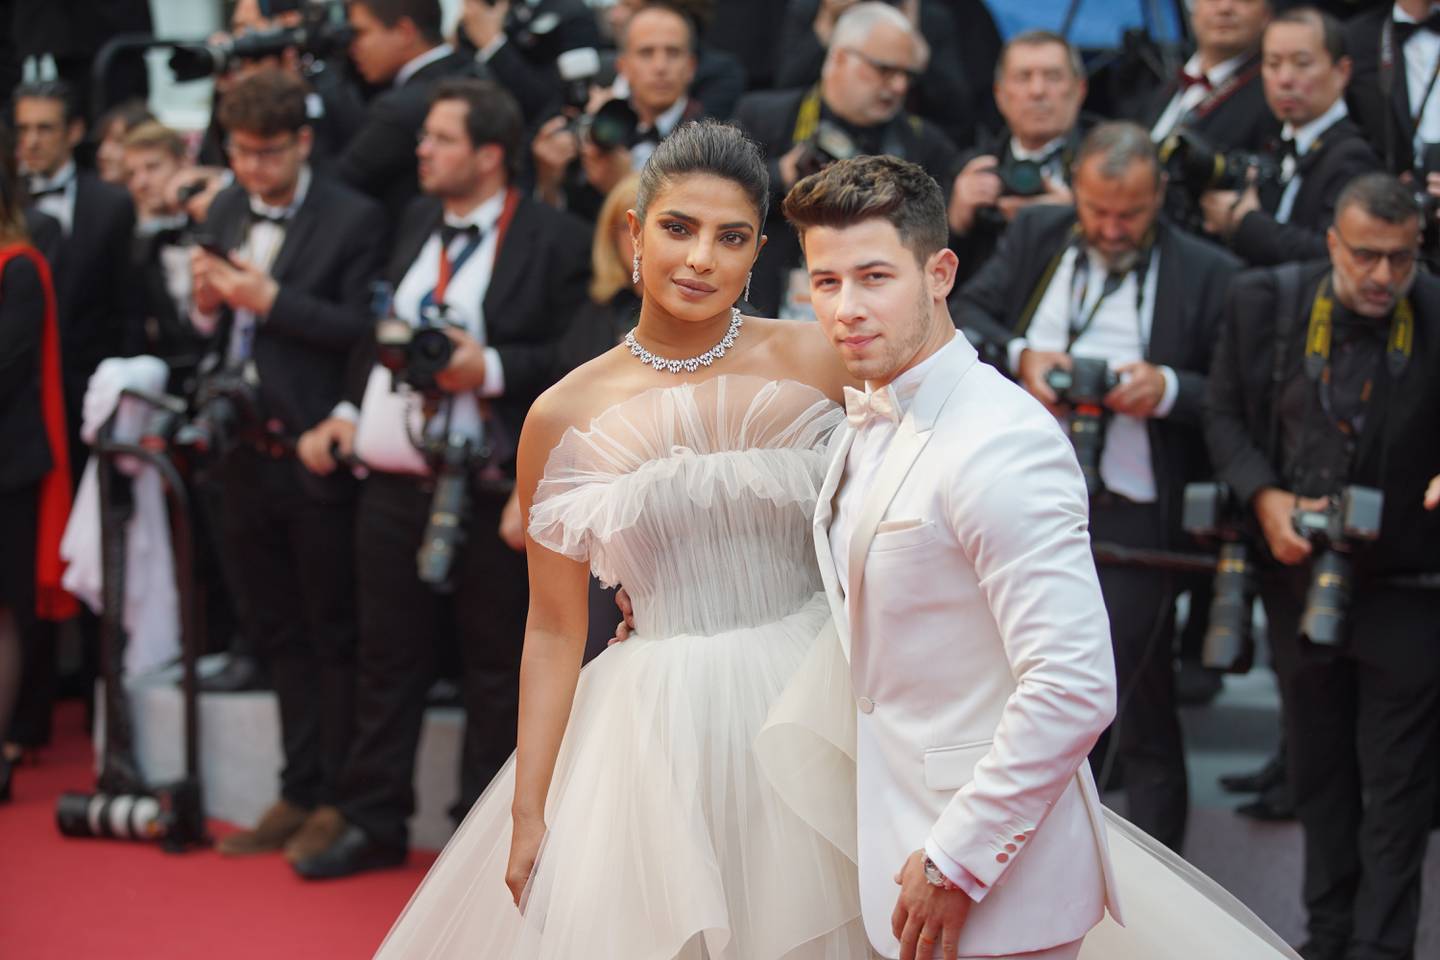 Priyanka Chopra Jonas with husband Nick Jonas at the Cannes Festival in 2019